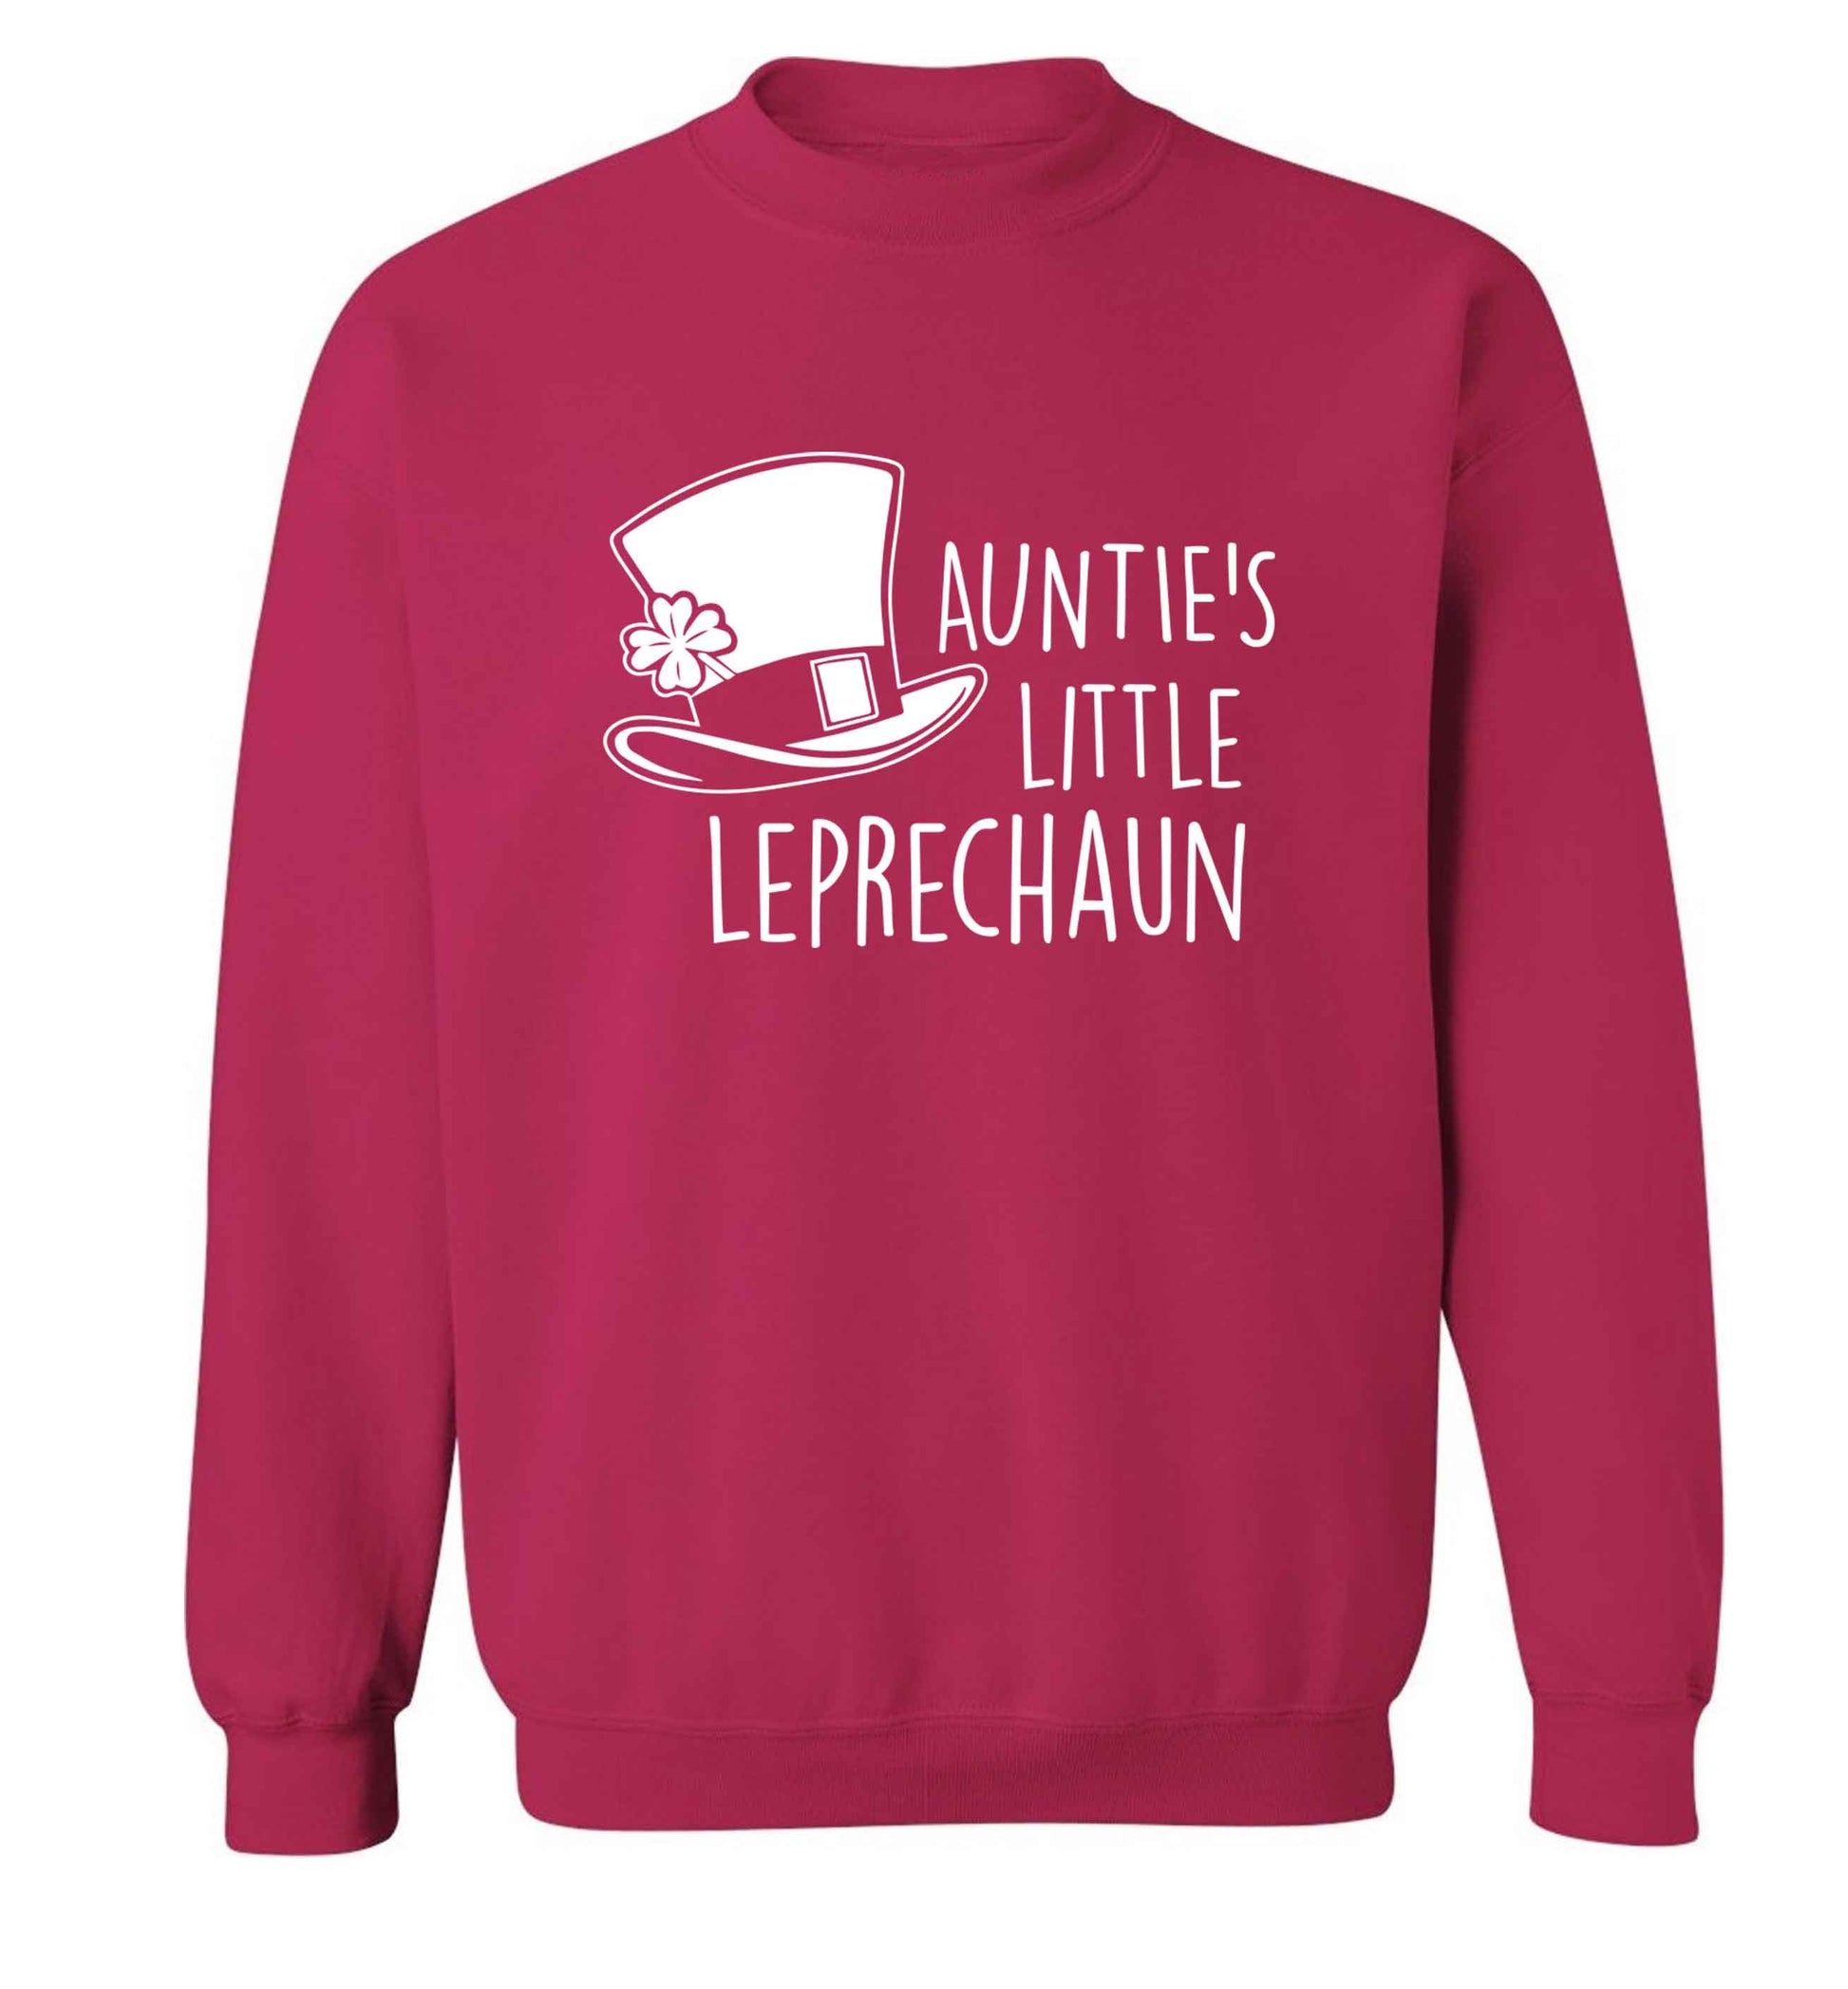 Auntie's little leprechaun adult's unisex pink sweater 2XL